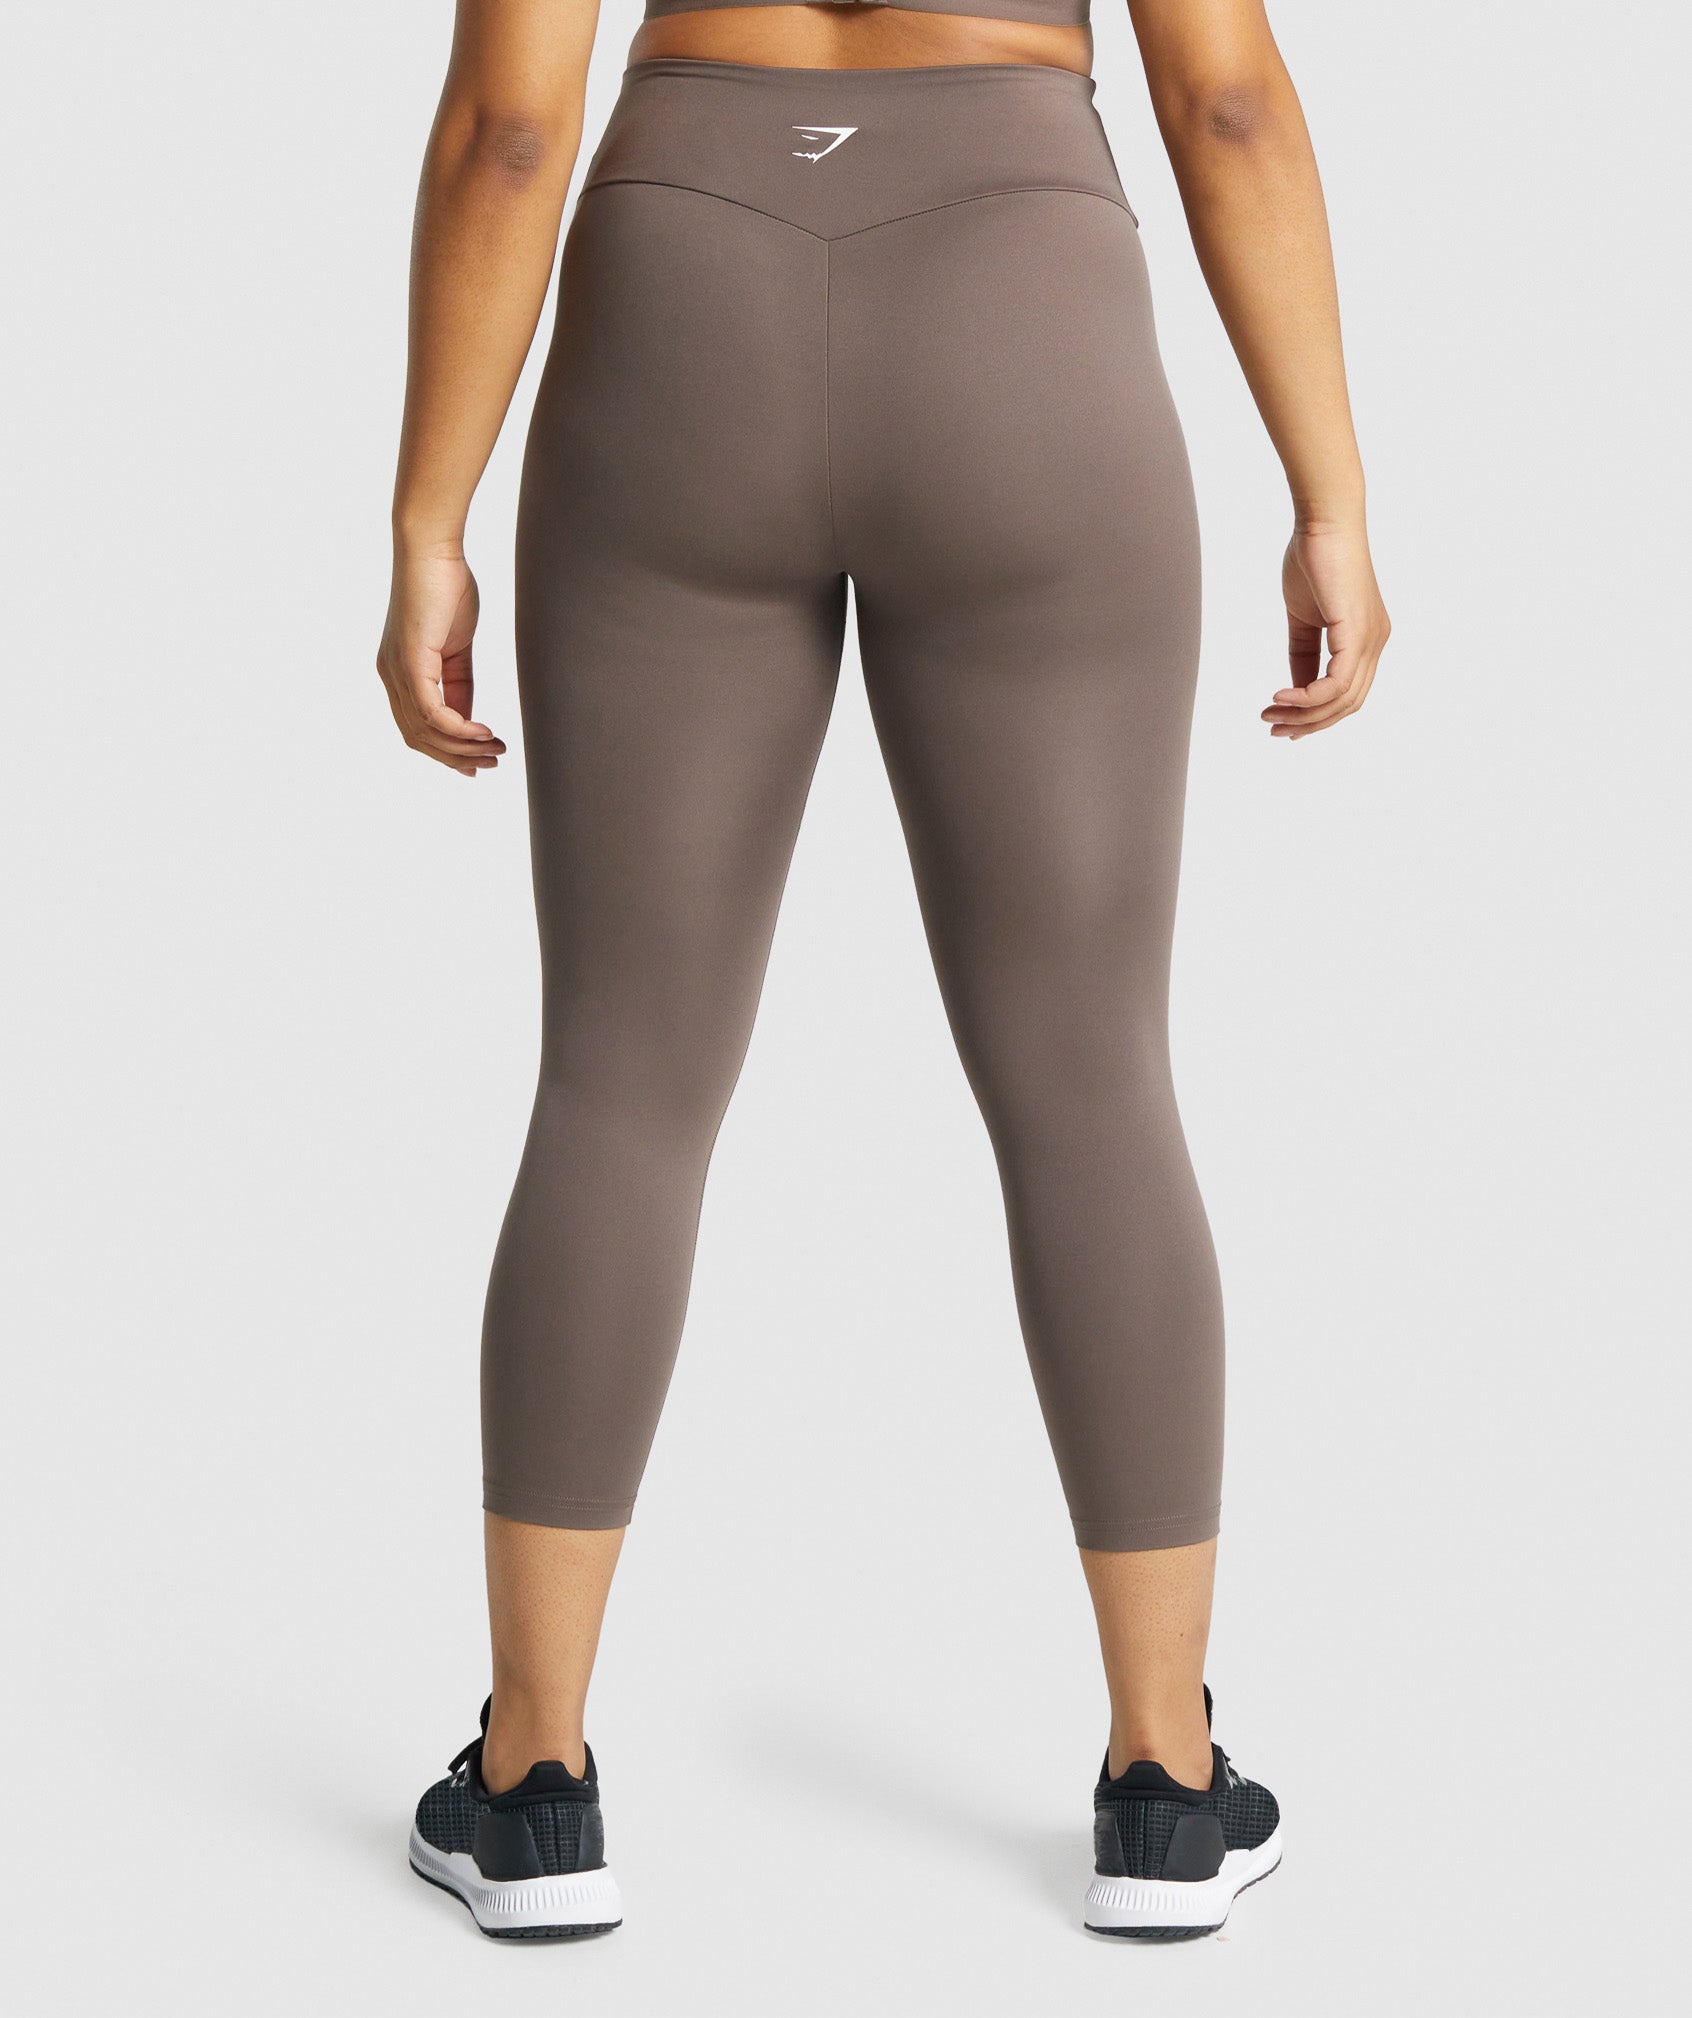 SZXZYGS Womens Yoga Pants Petite Length Women Workout Out Pocket Leggings  Fitness Sports Running Yoga Pants